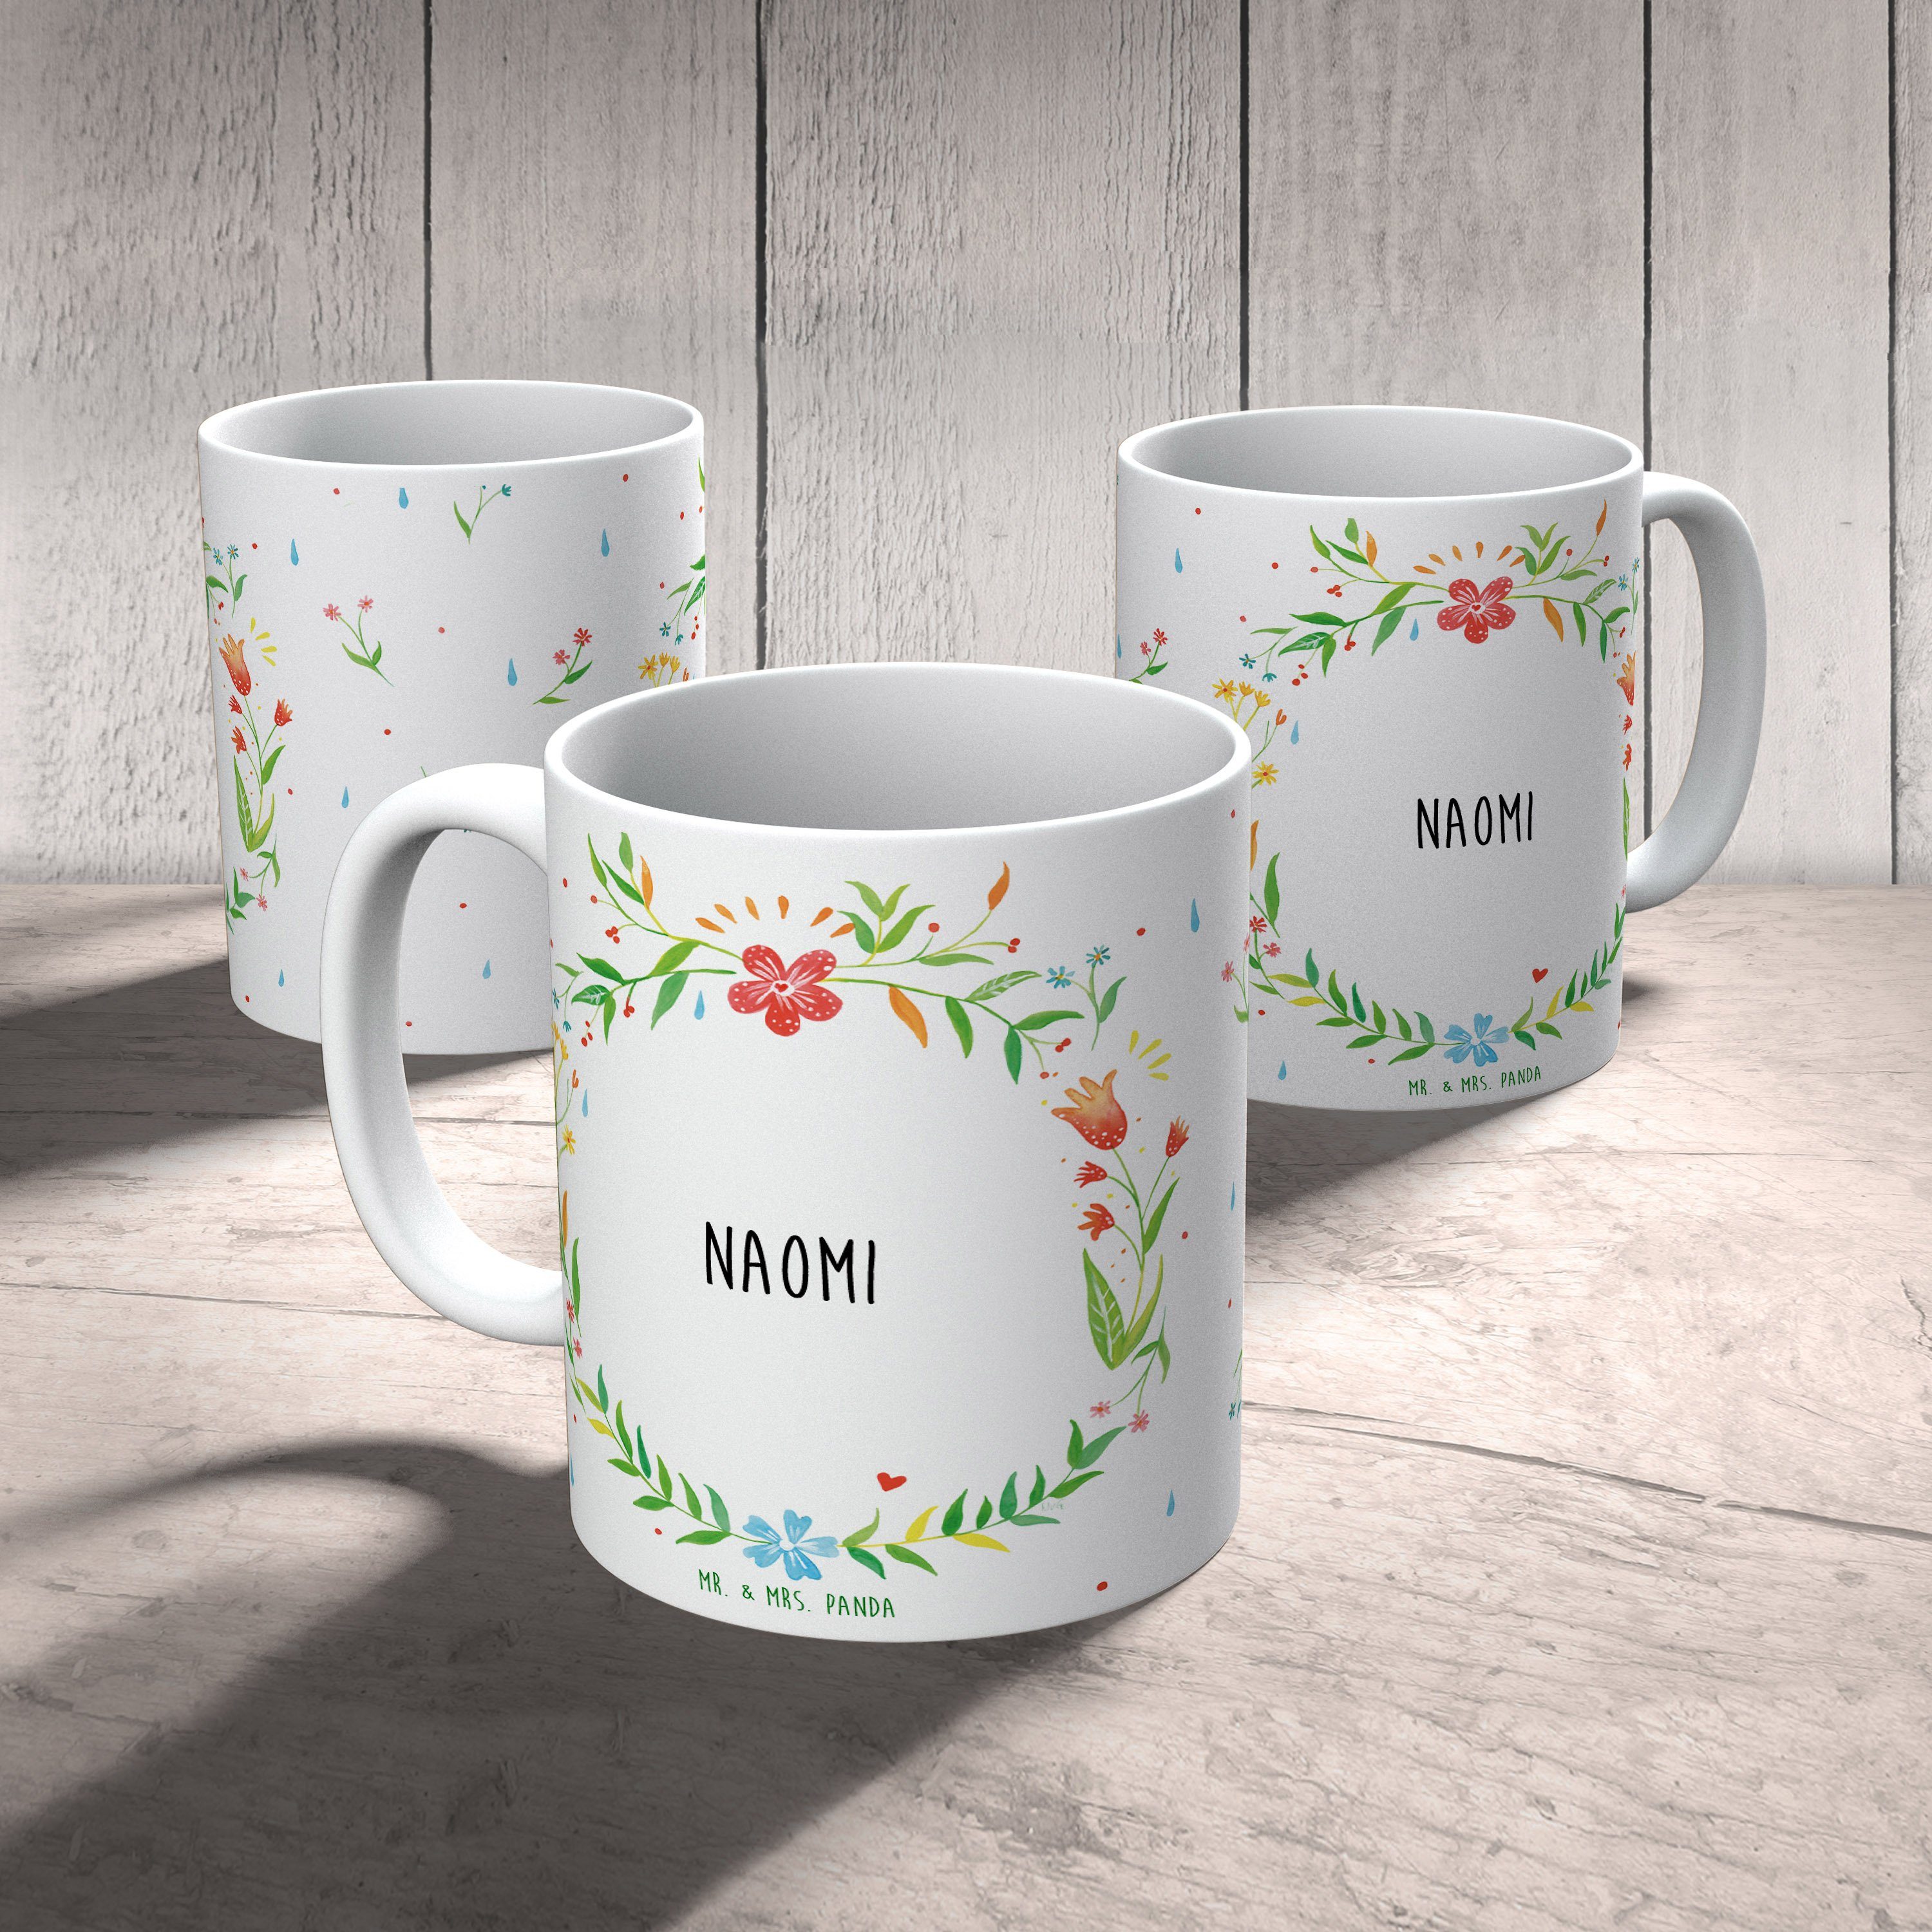 & Mr. Keramik - Mrs. Teebech, Teetasse, Kaffeetasse, Tasse Tasse Panda Motive, Geschenk, Naomi Tasse,